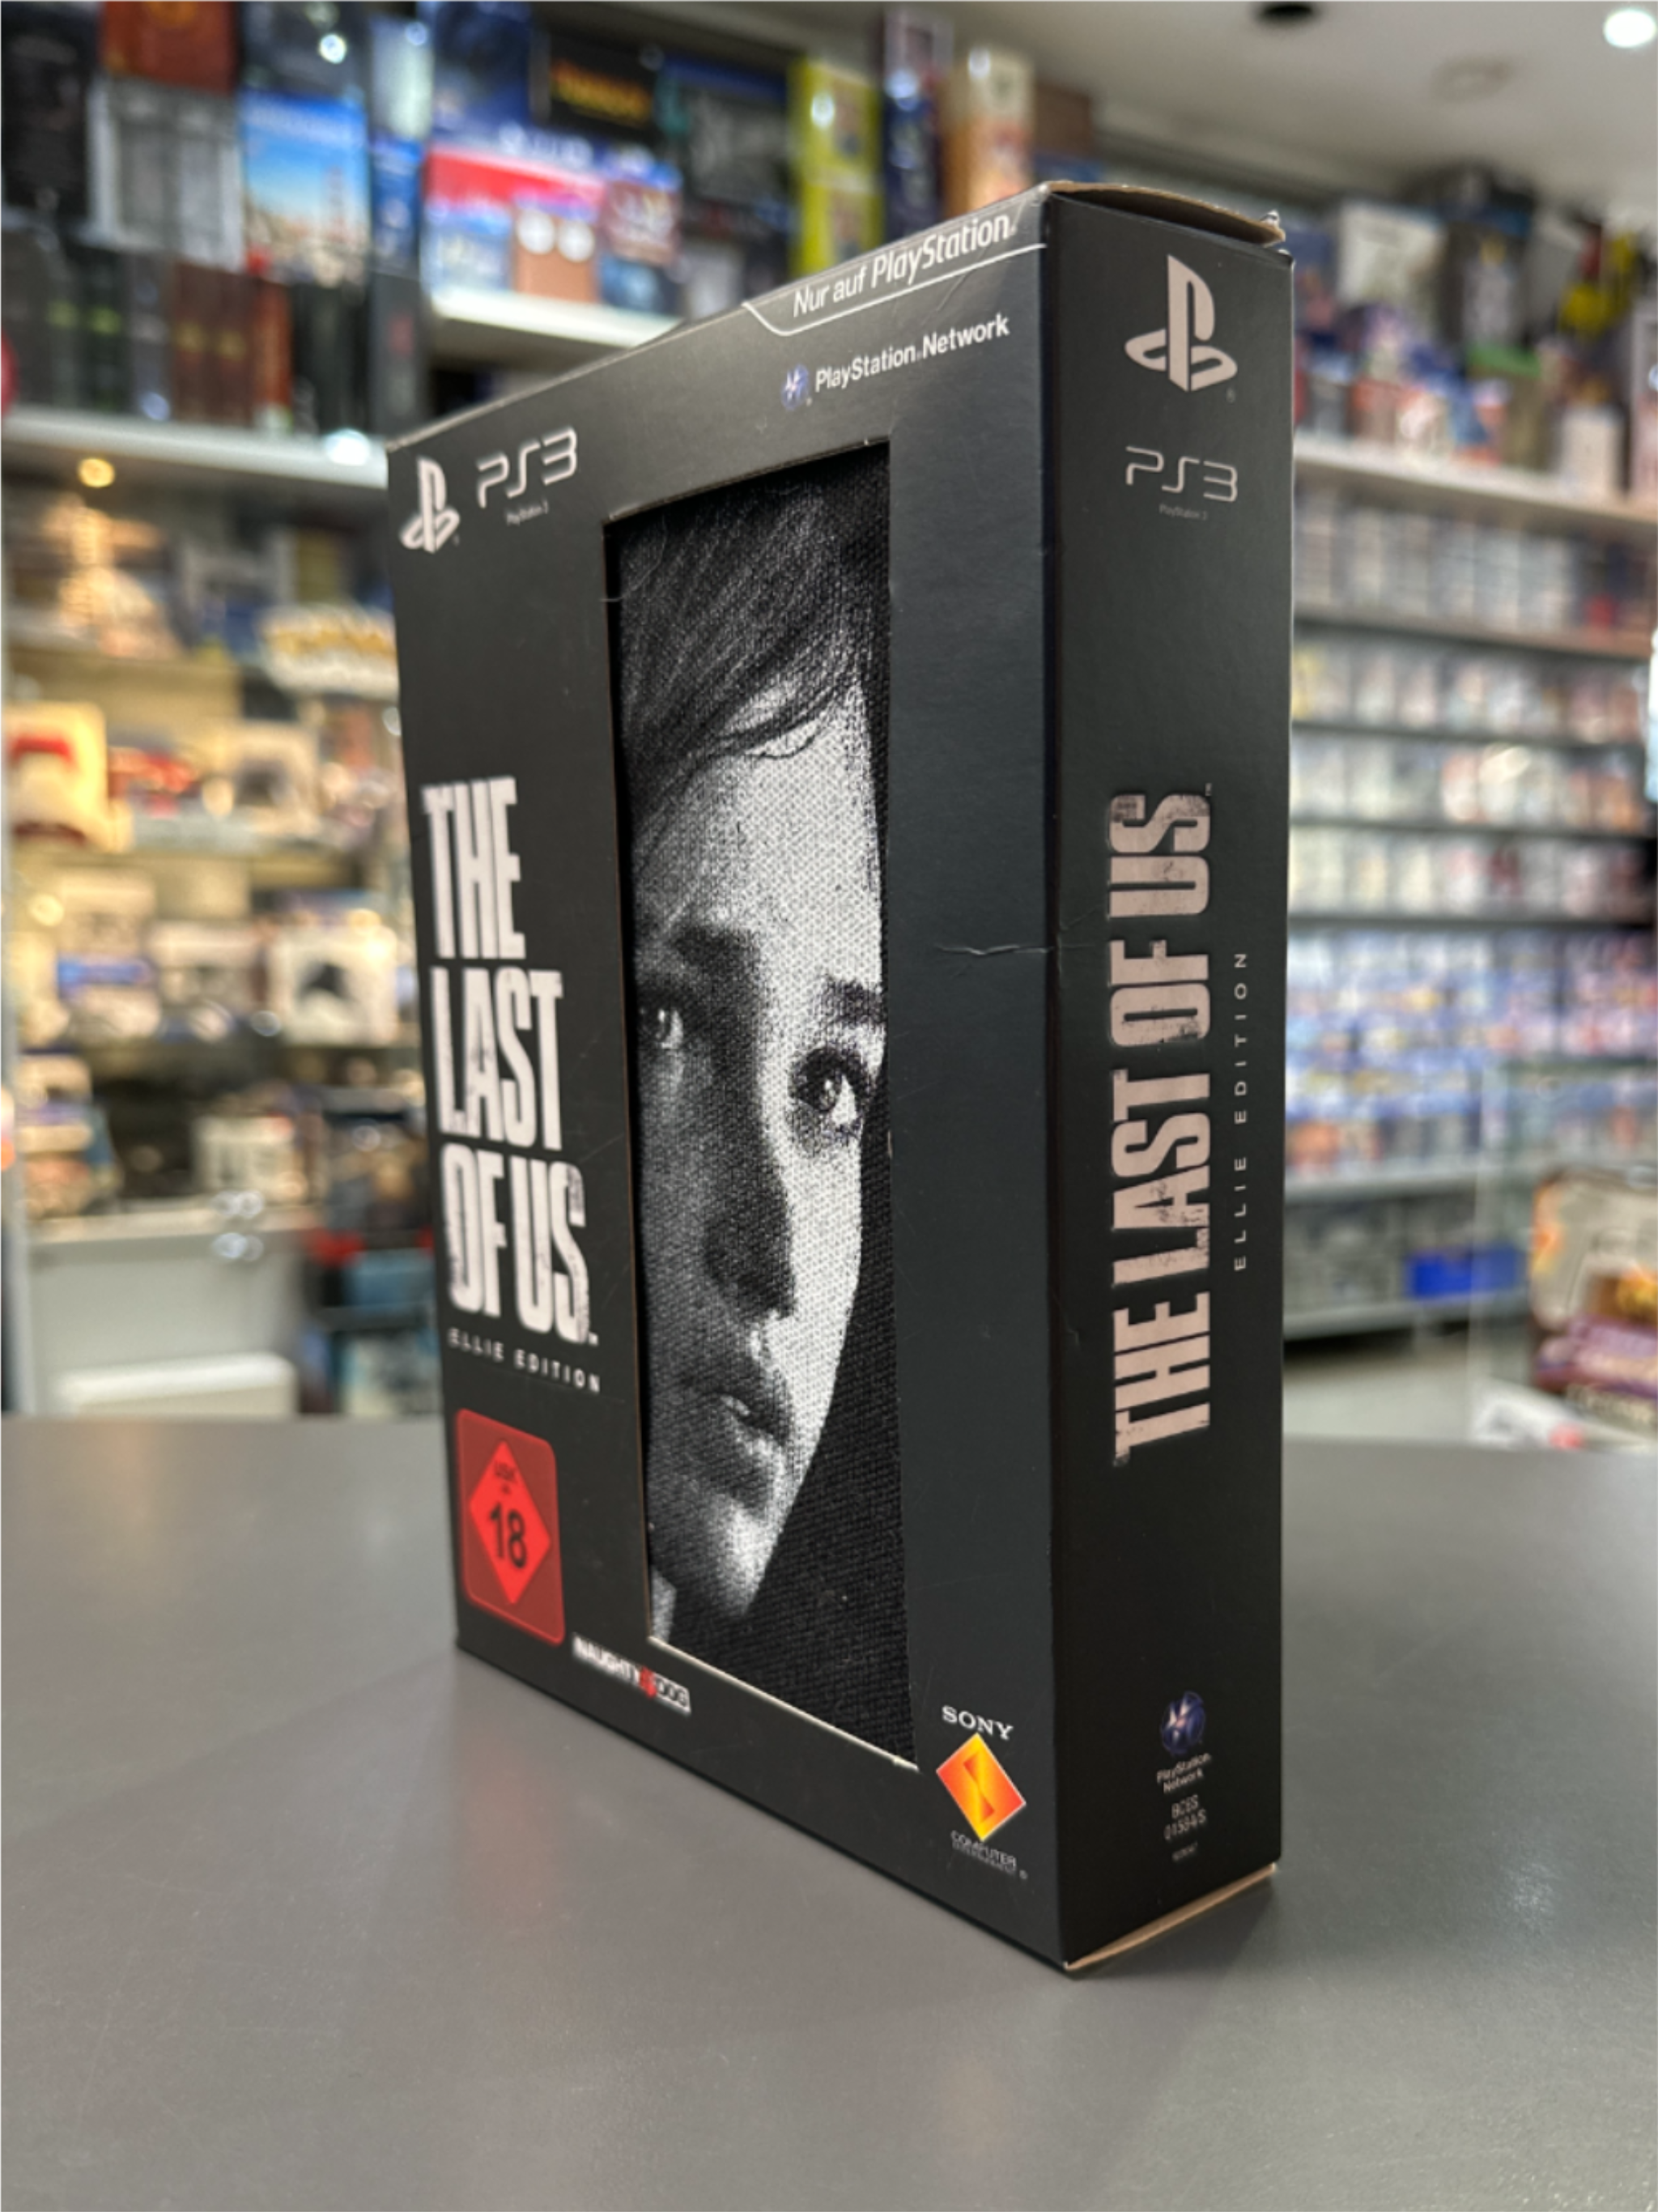 The Last of Us - Ellie Edition - [PlayStation 3] gebraucht